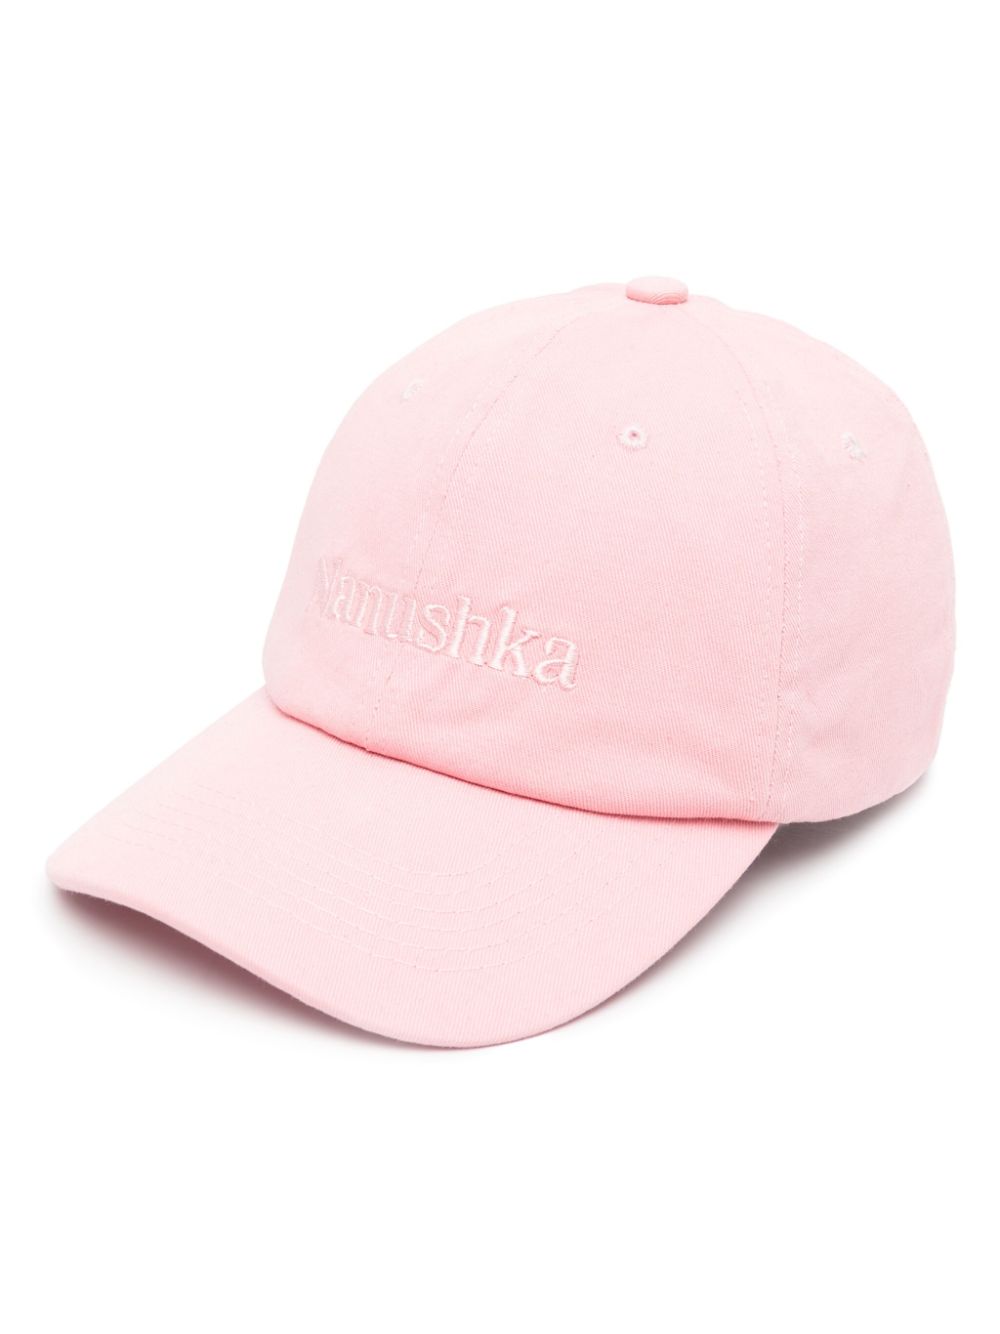 nanushka casquette en coton à logo brodé - rose